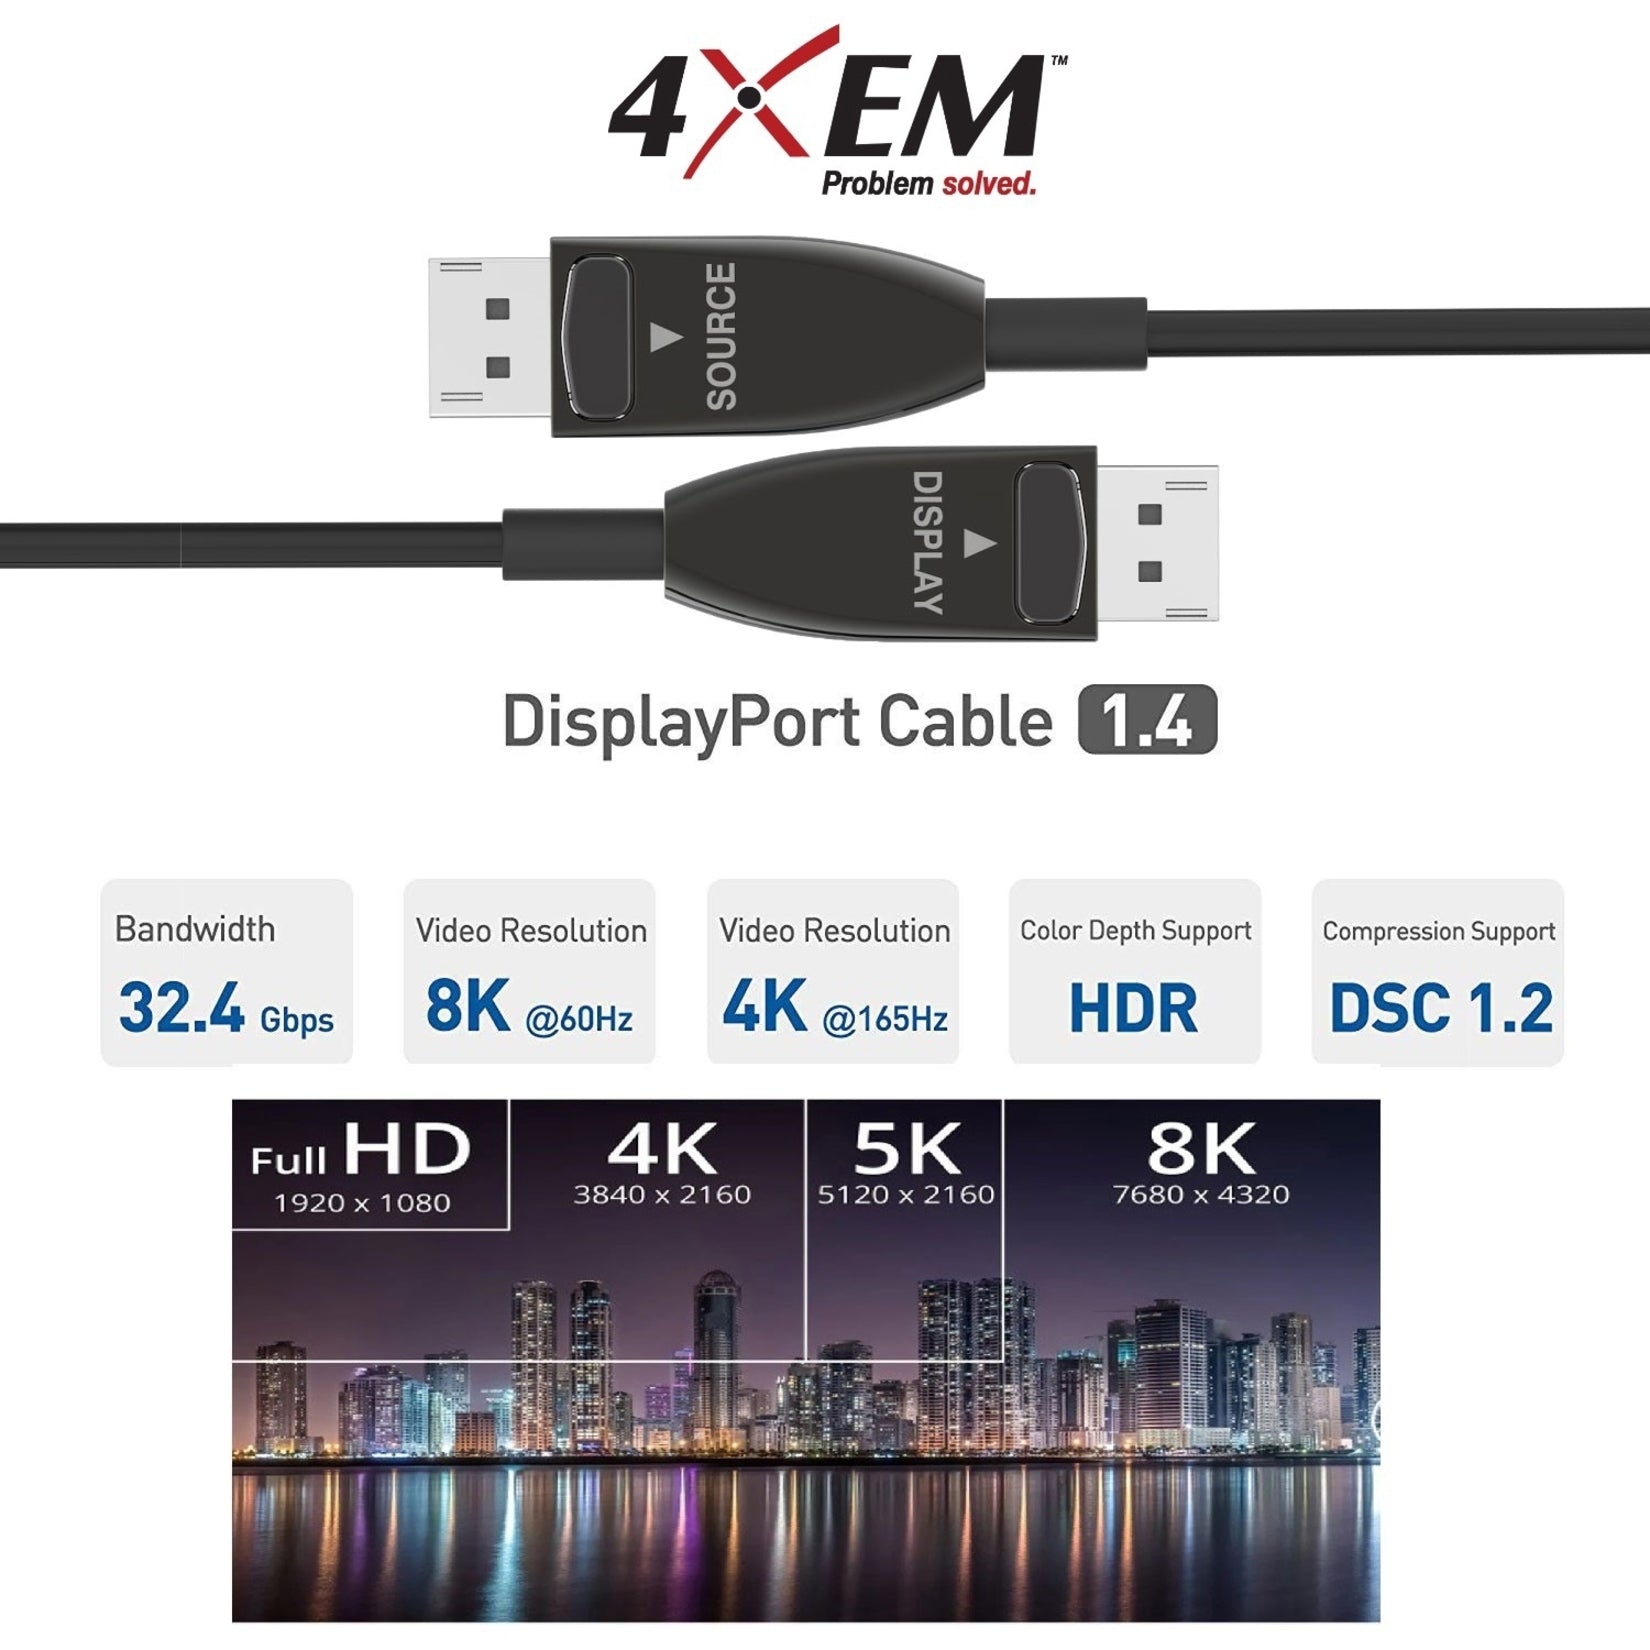 4XEM 4XFIBERDPAOC10M 10M 33FT Active Optical Fiber 1.4 DisplayPort Cable, High-Speed Data Transfer, EMI/RF Protection